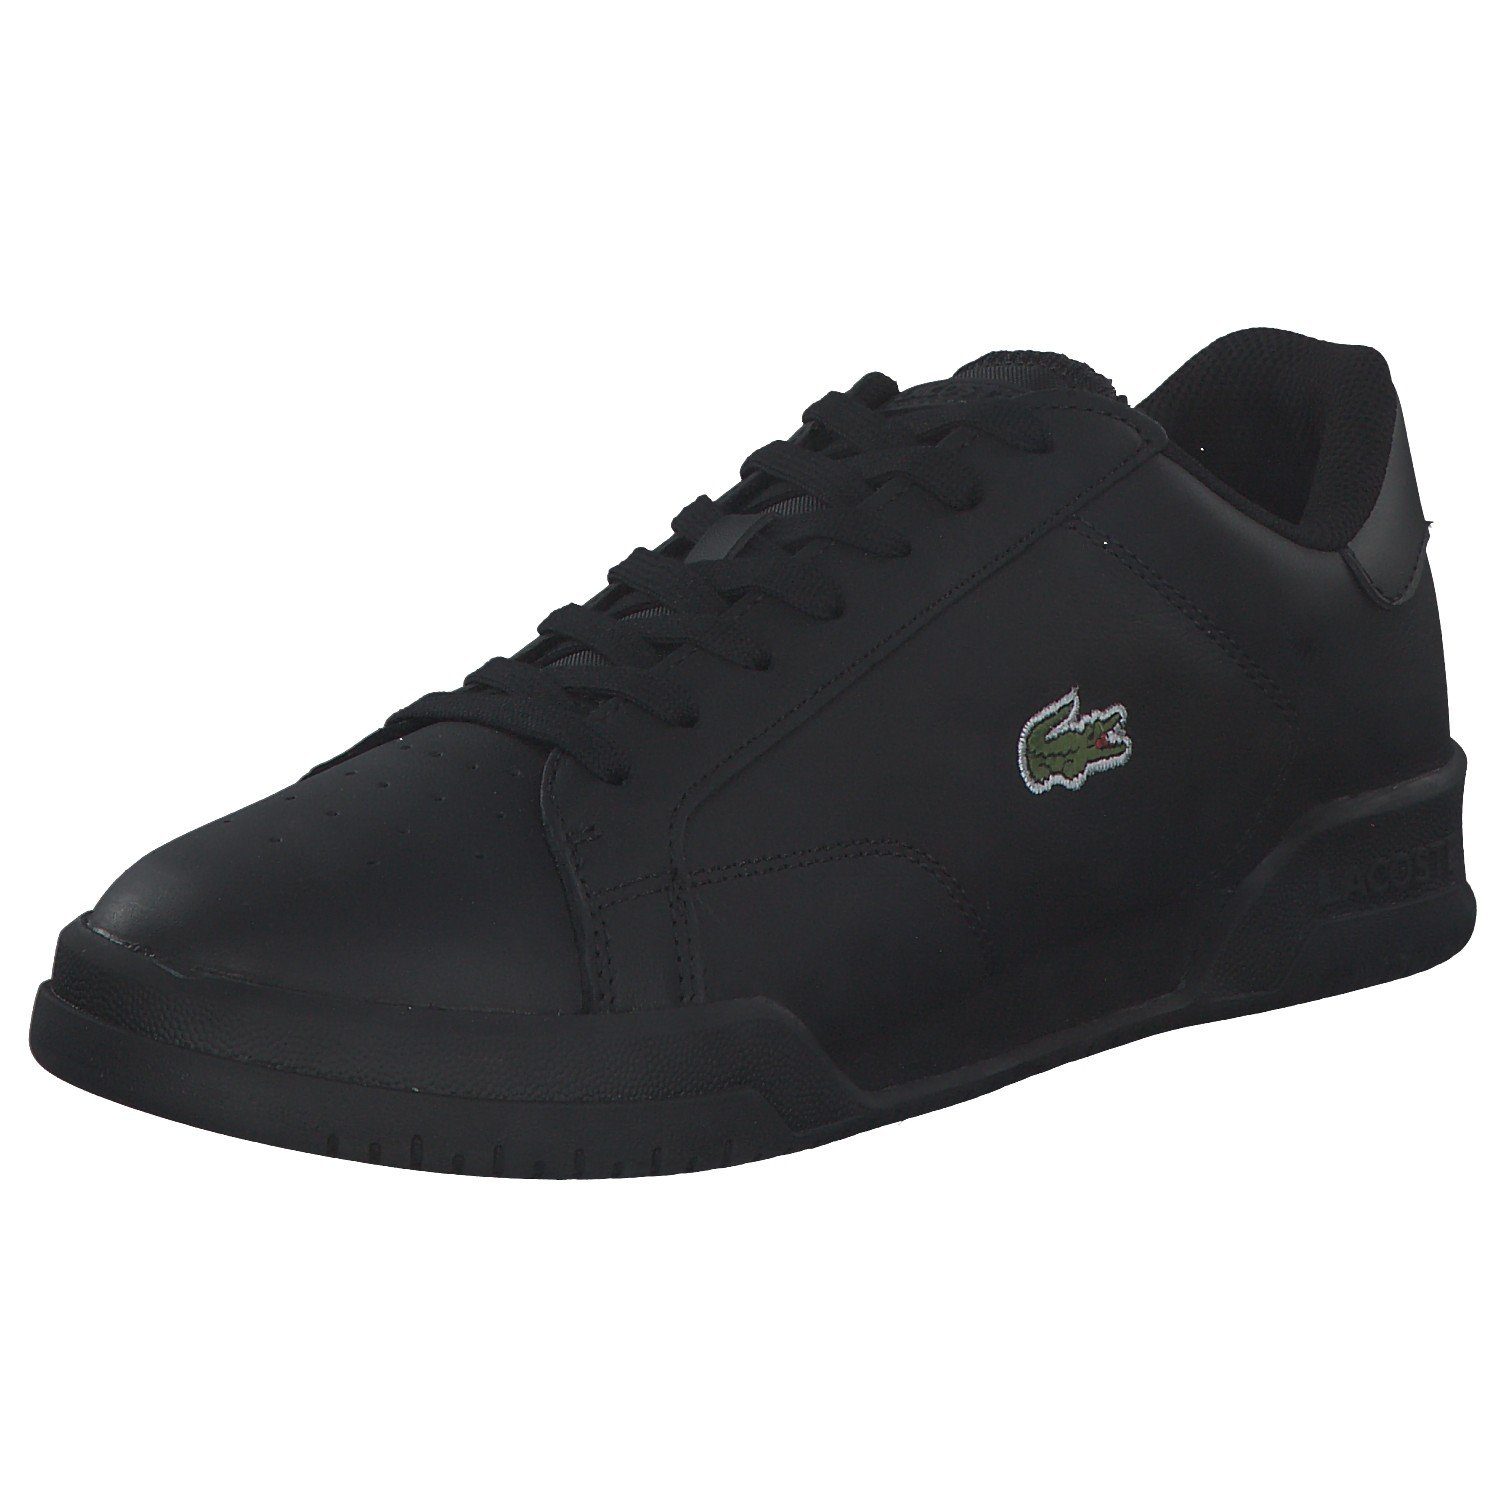 Lacoste Lacoste Twin Serve 41SMA0018 Sneaker black/black (12601118)